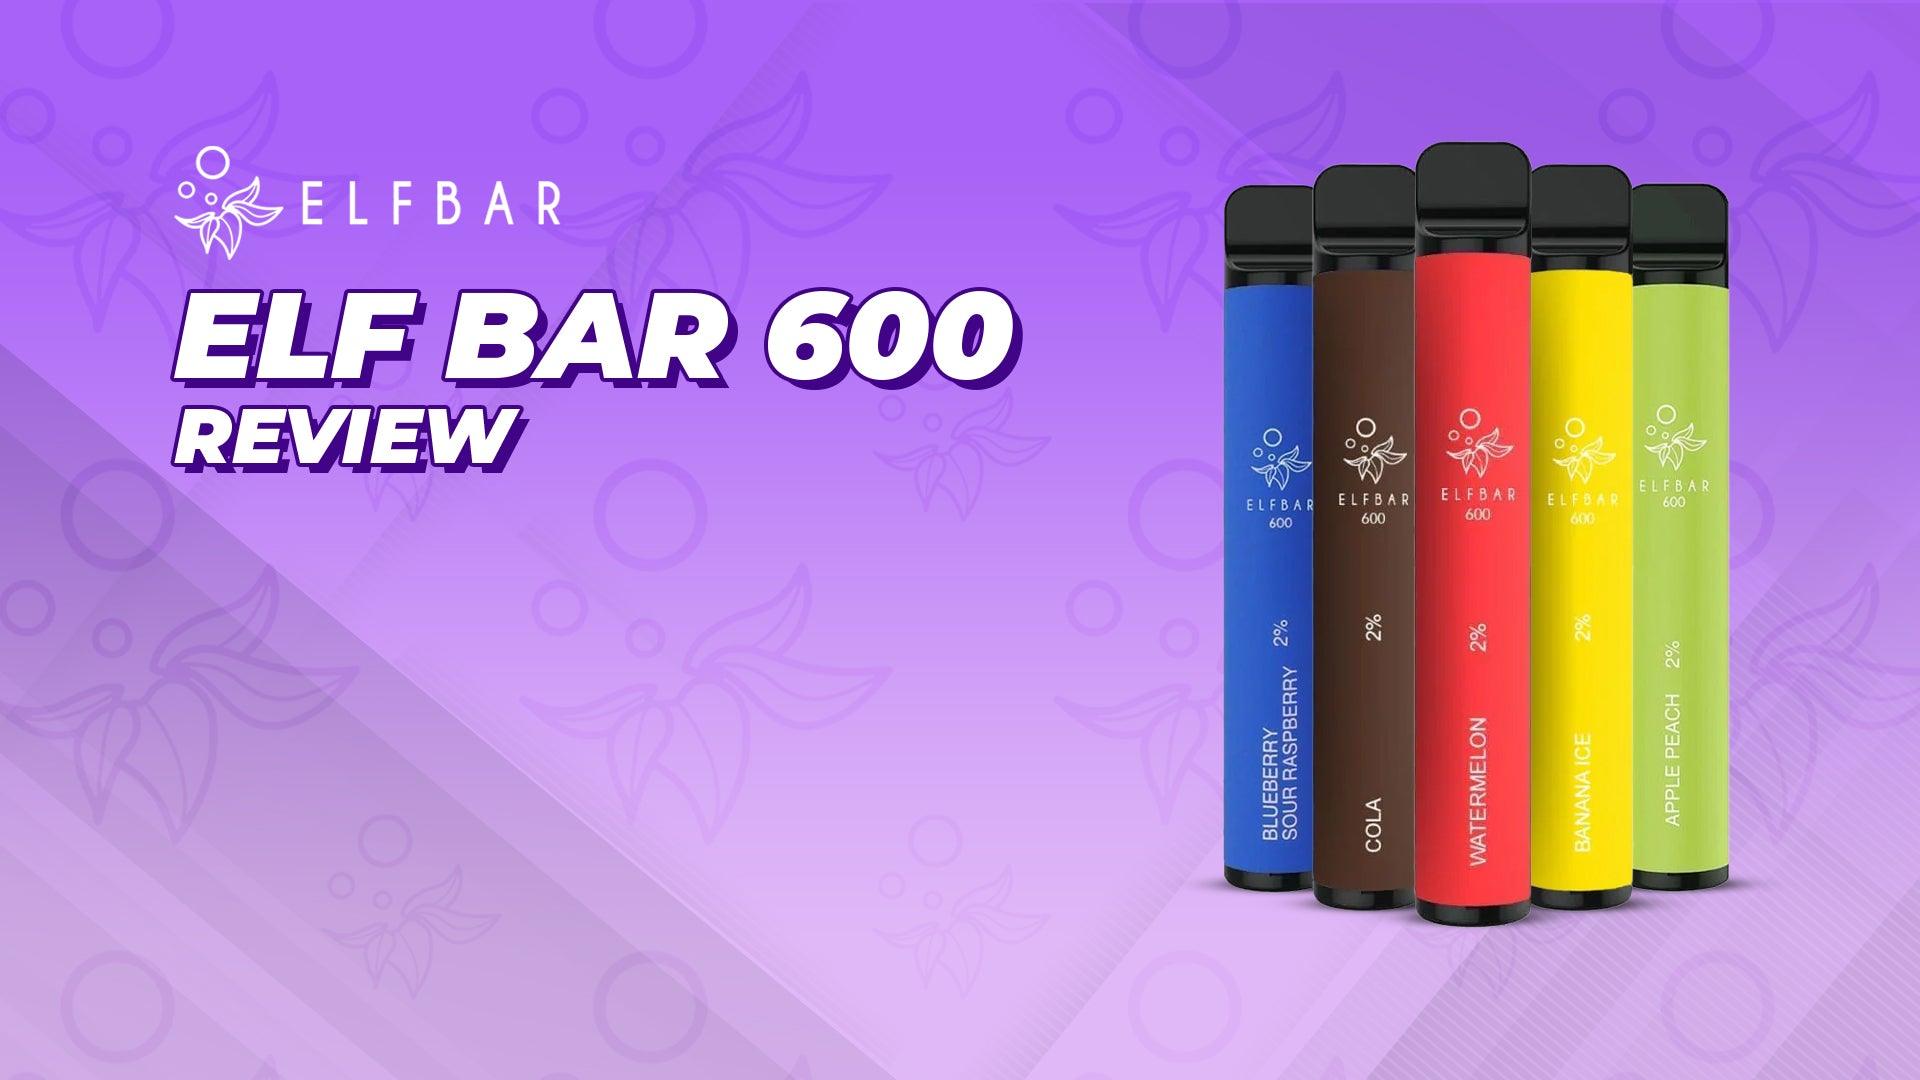 Elf Bar 600 Review - Brand:Elf Bar, Category:Vape Kits, Sub Category:Disposables